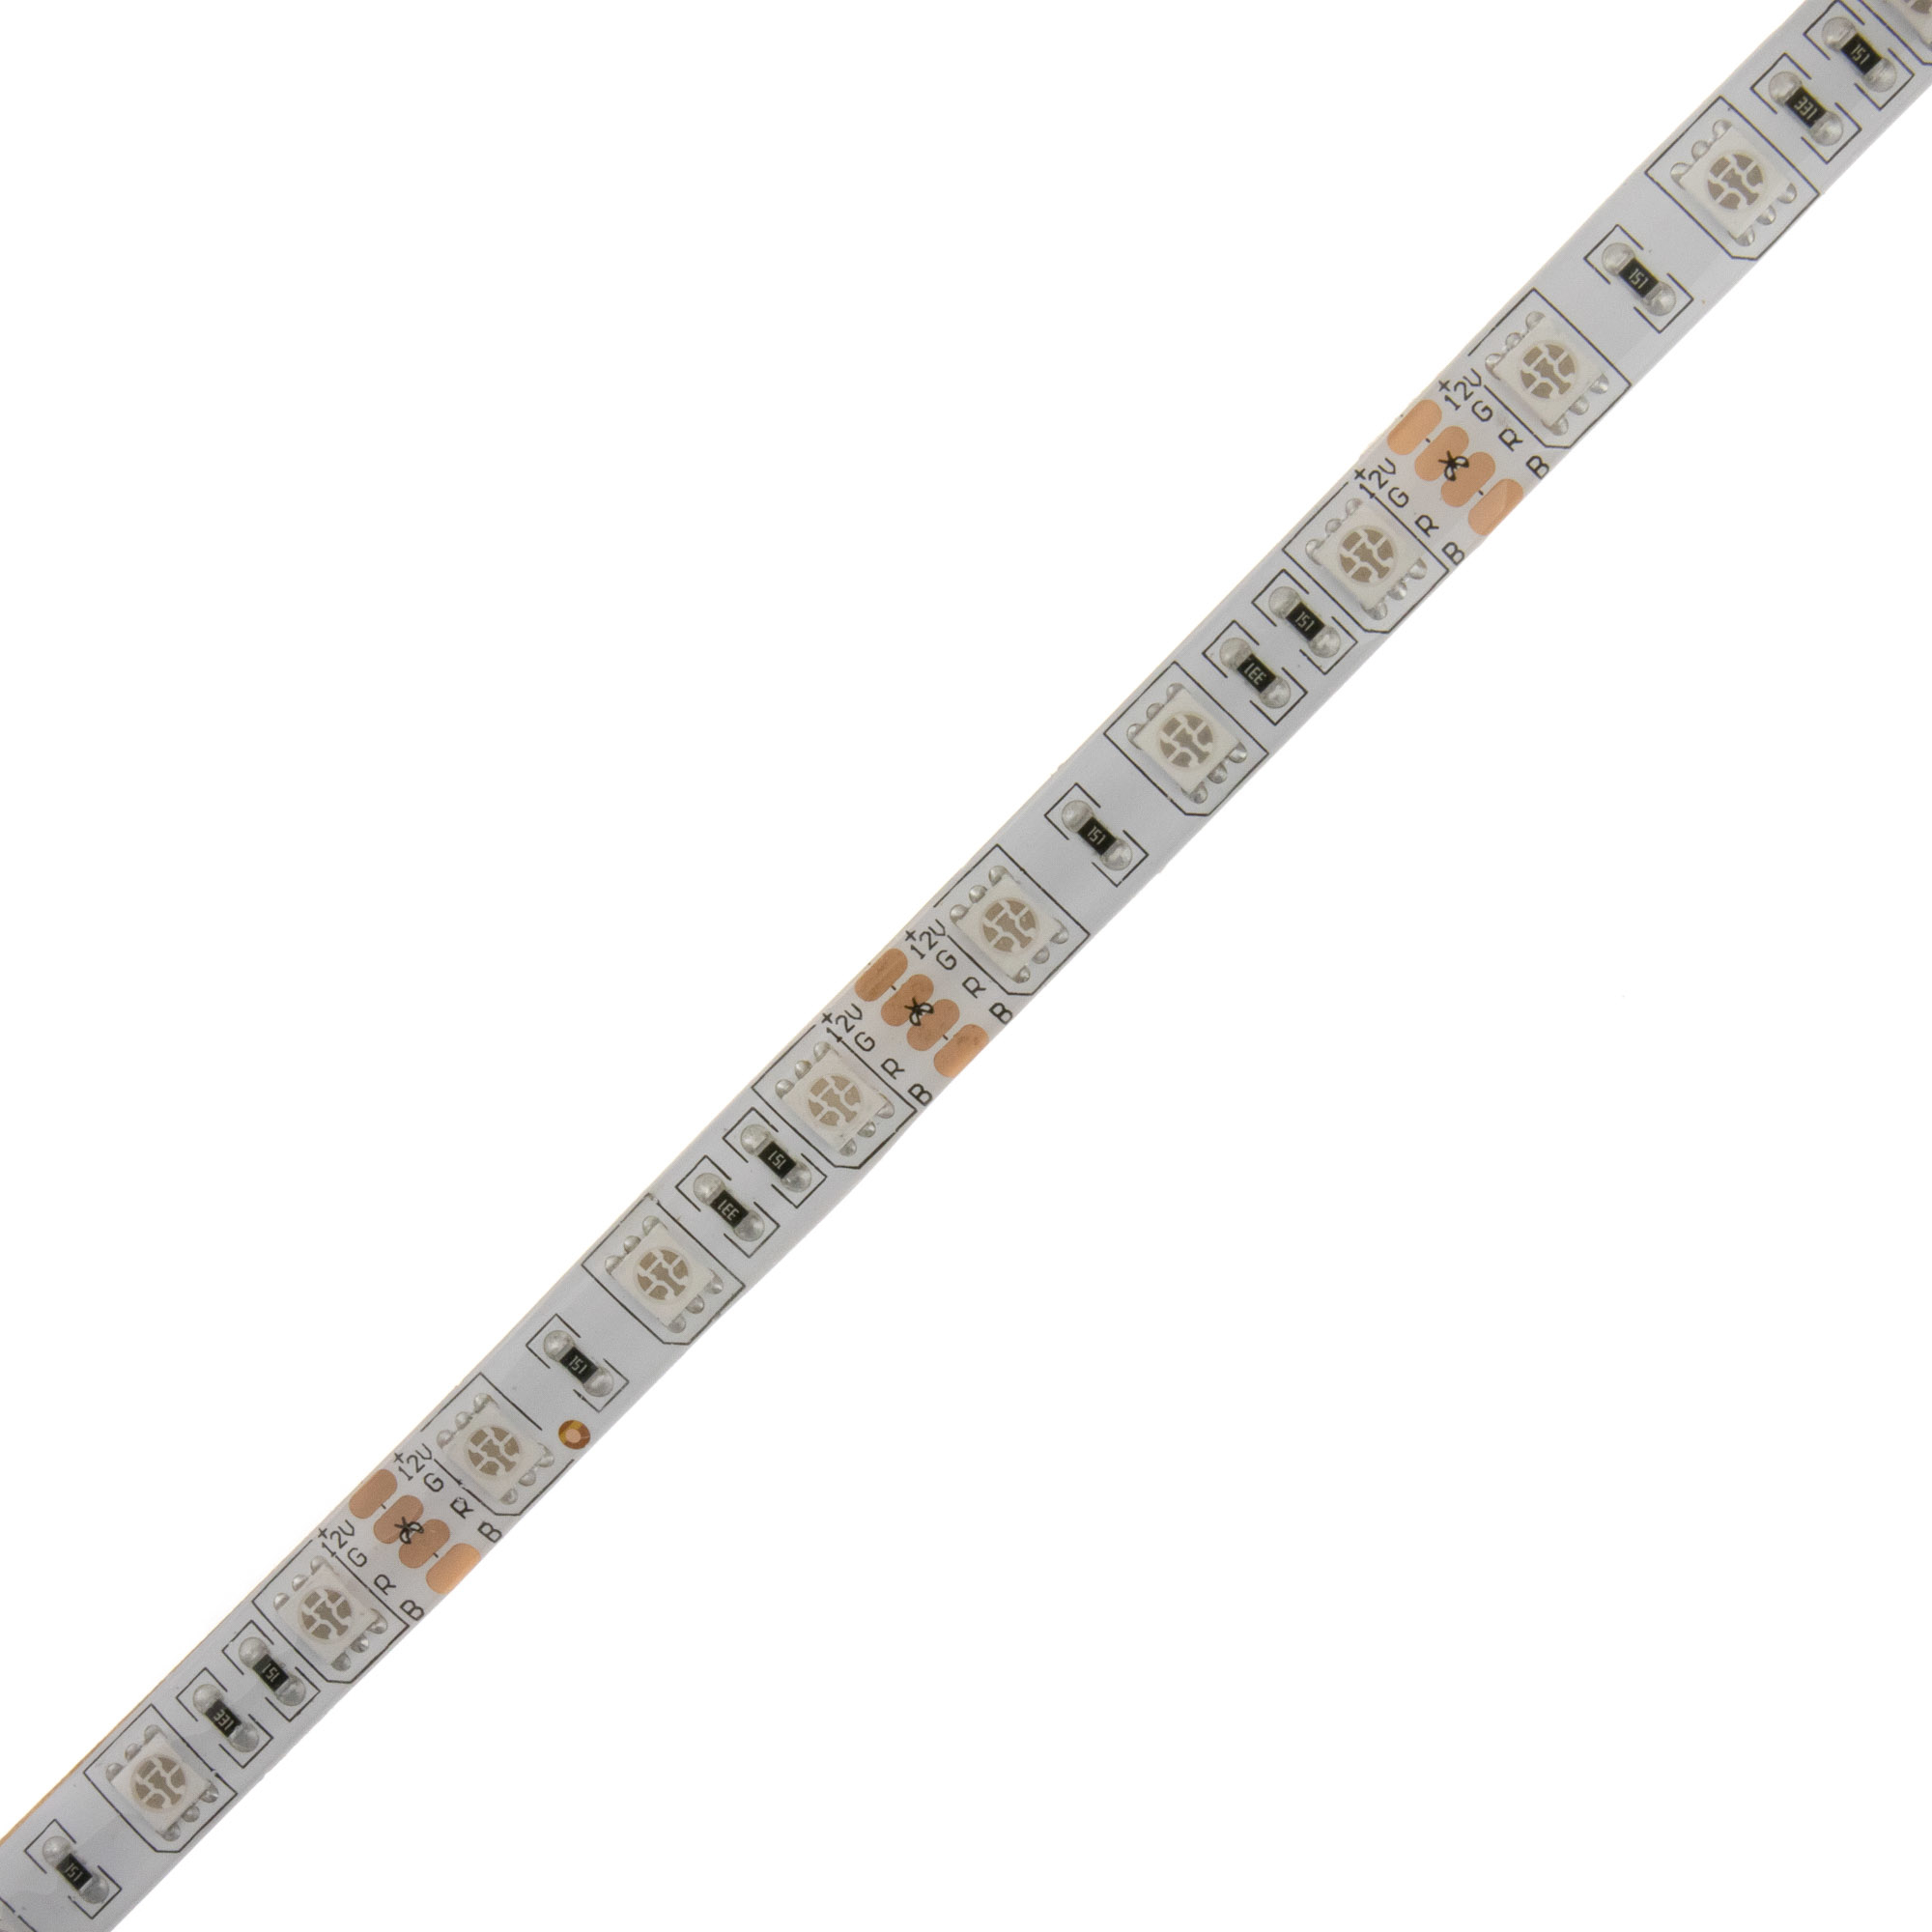 RGB Stripe 12V, 500cm, 60 LEDs/m, IP65